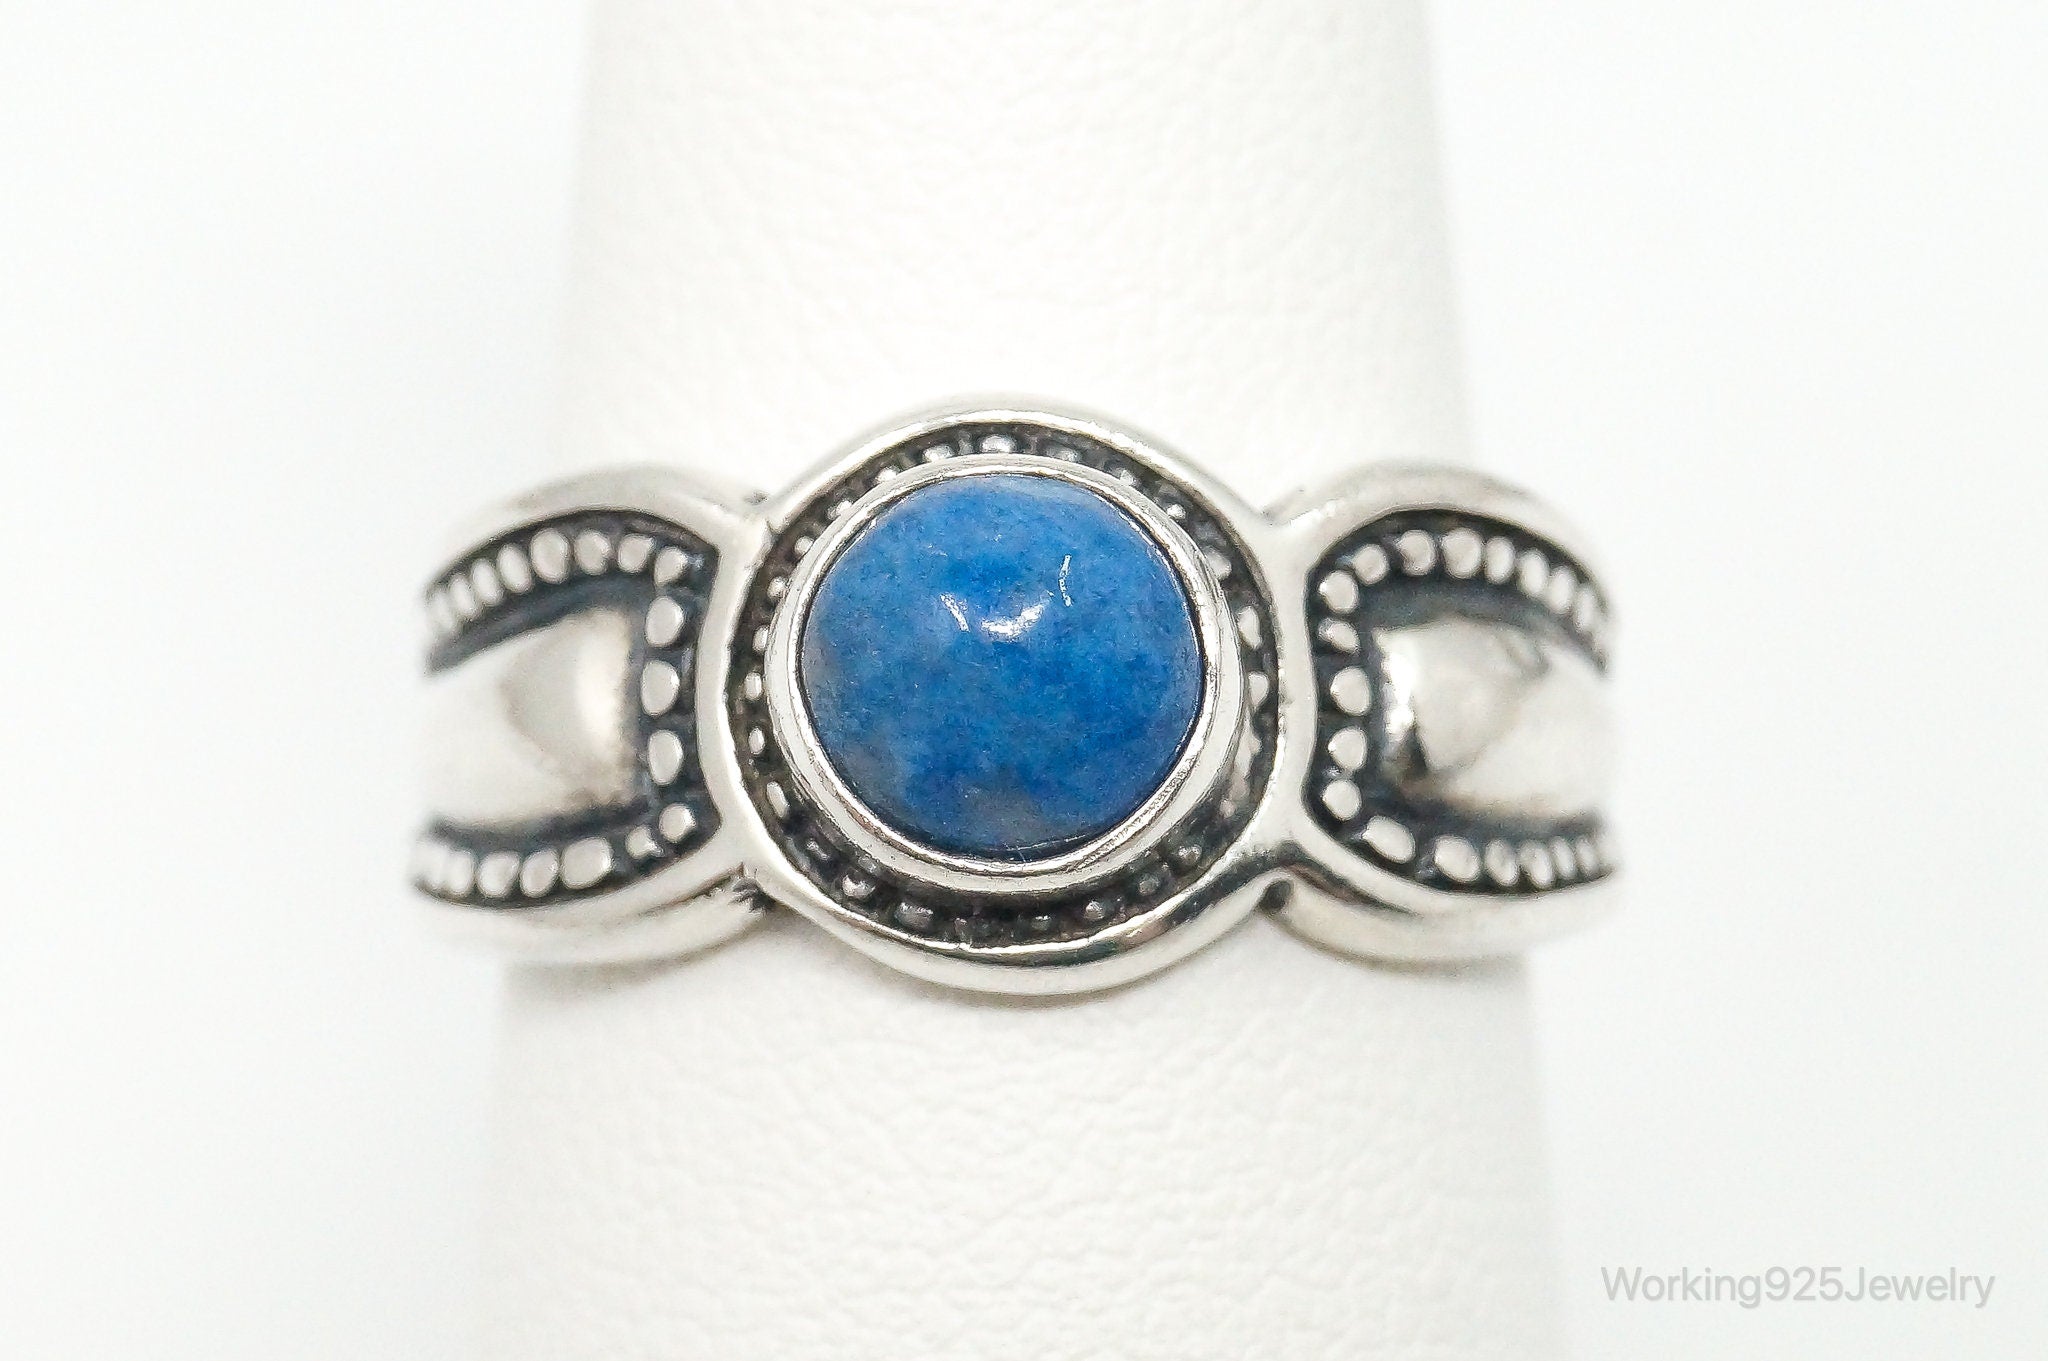 Vintage Southwestern Style Lapis Lazuli Sterling Silver Ring - Size 5.75